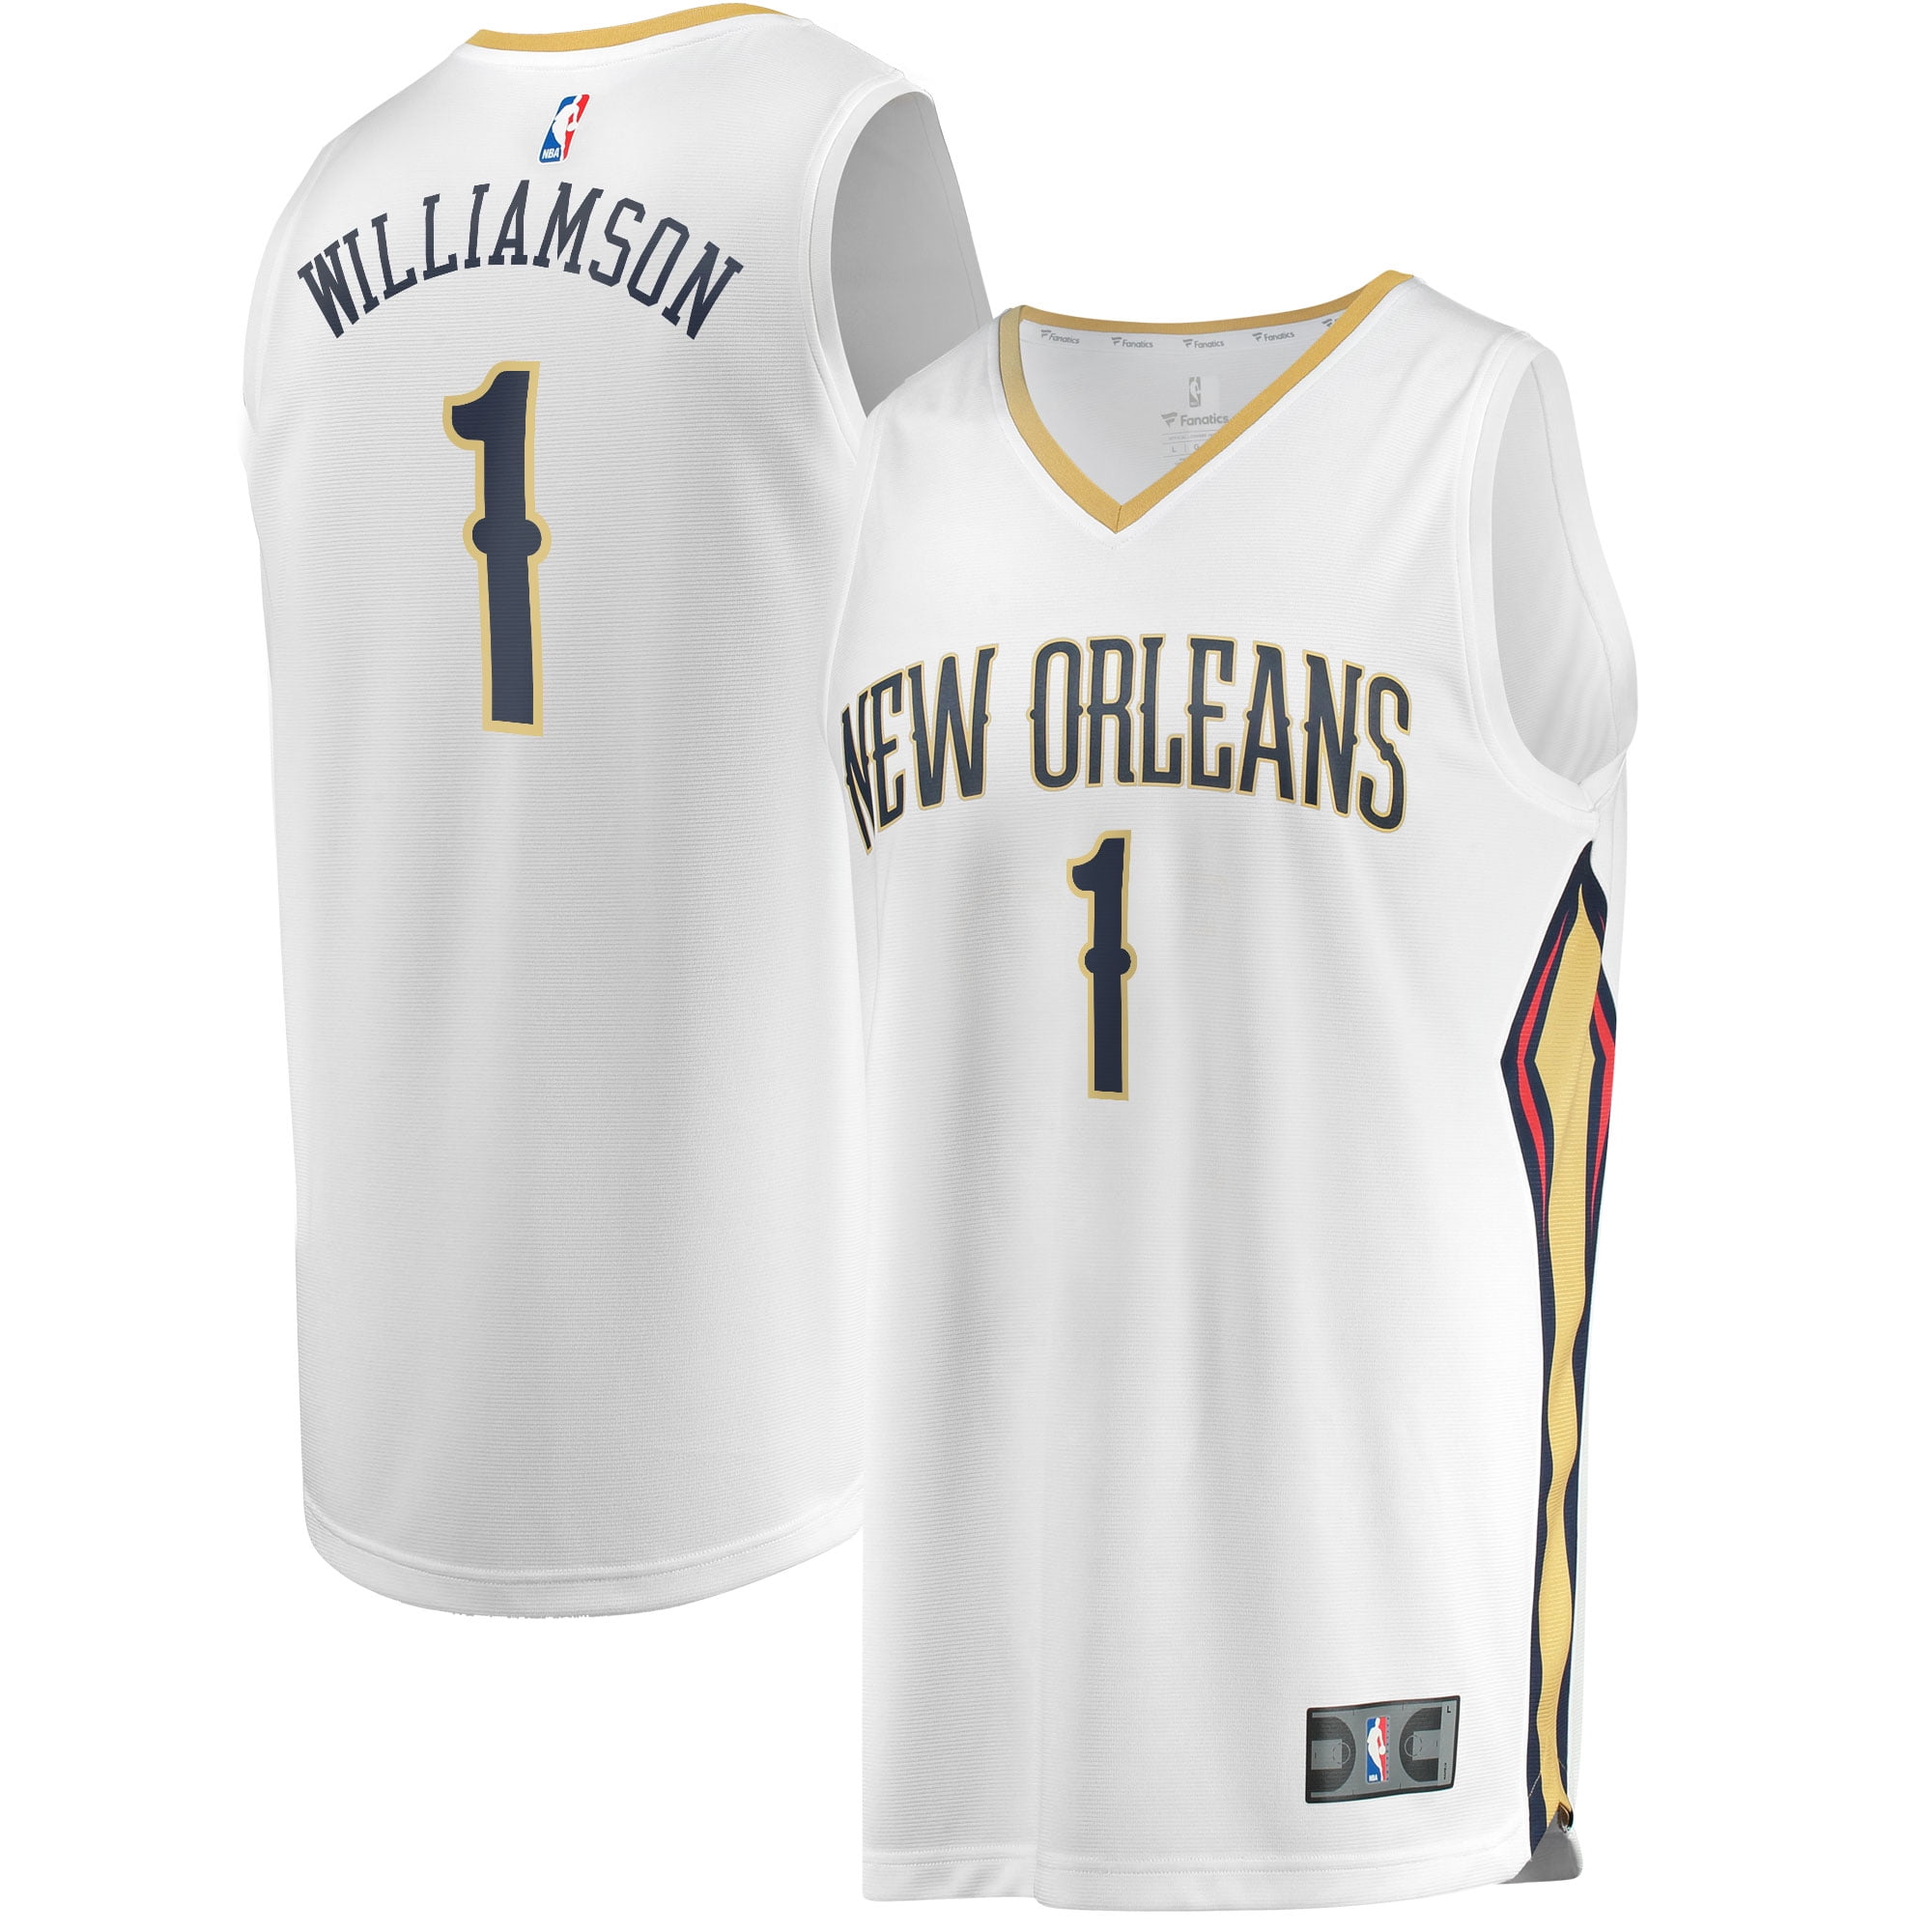 New Orleans Hornets Men NBA Jerseys for sale